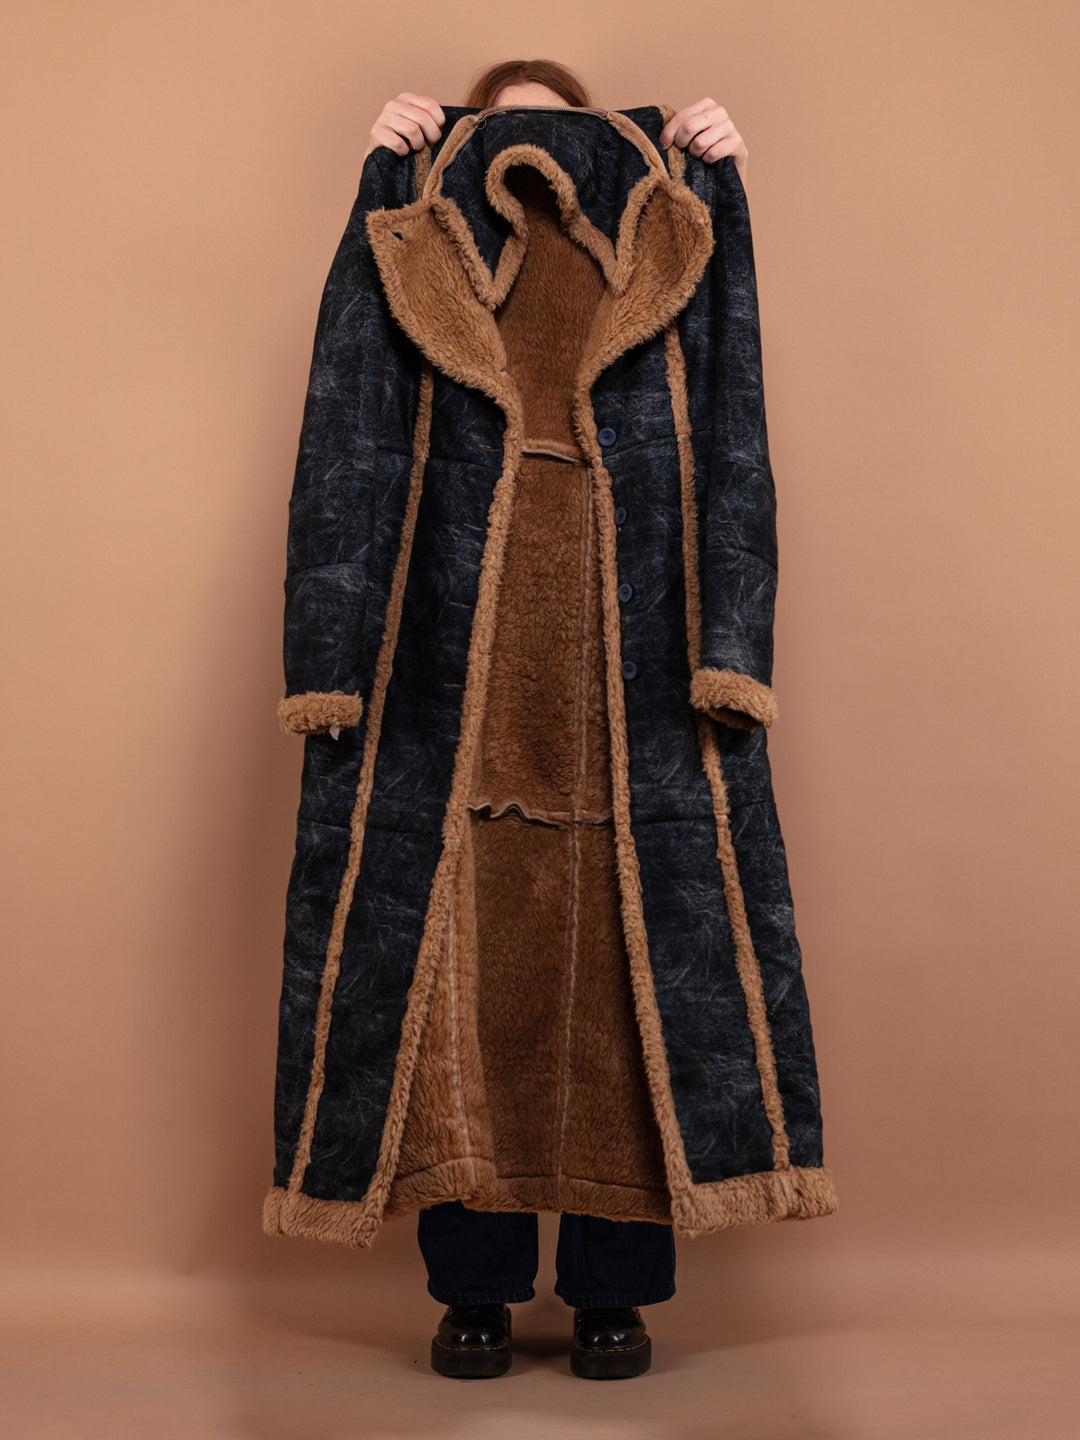 Faux Sheepskin Maxi Coat, Size M Faux Fur Coat, 90s Penny Lane Coat, Eco Friendly Coat, Cruelty Free Sustainable Clothing, 90s Fur Overcoat